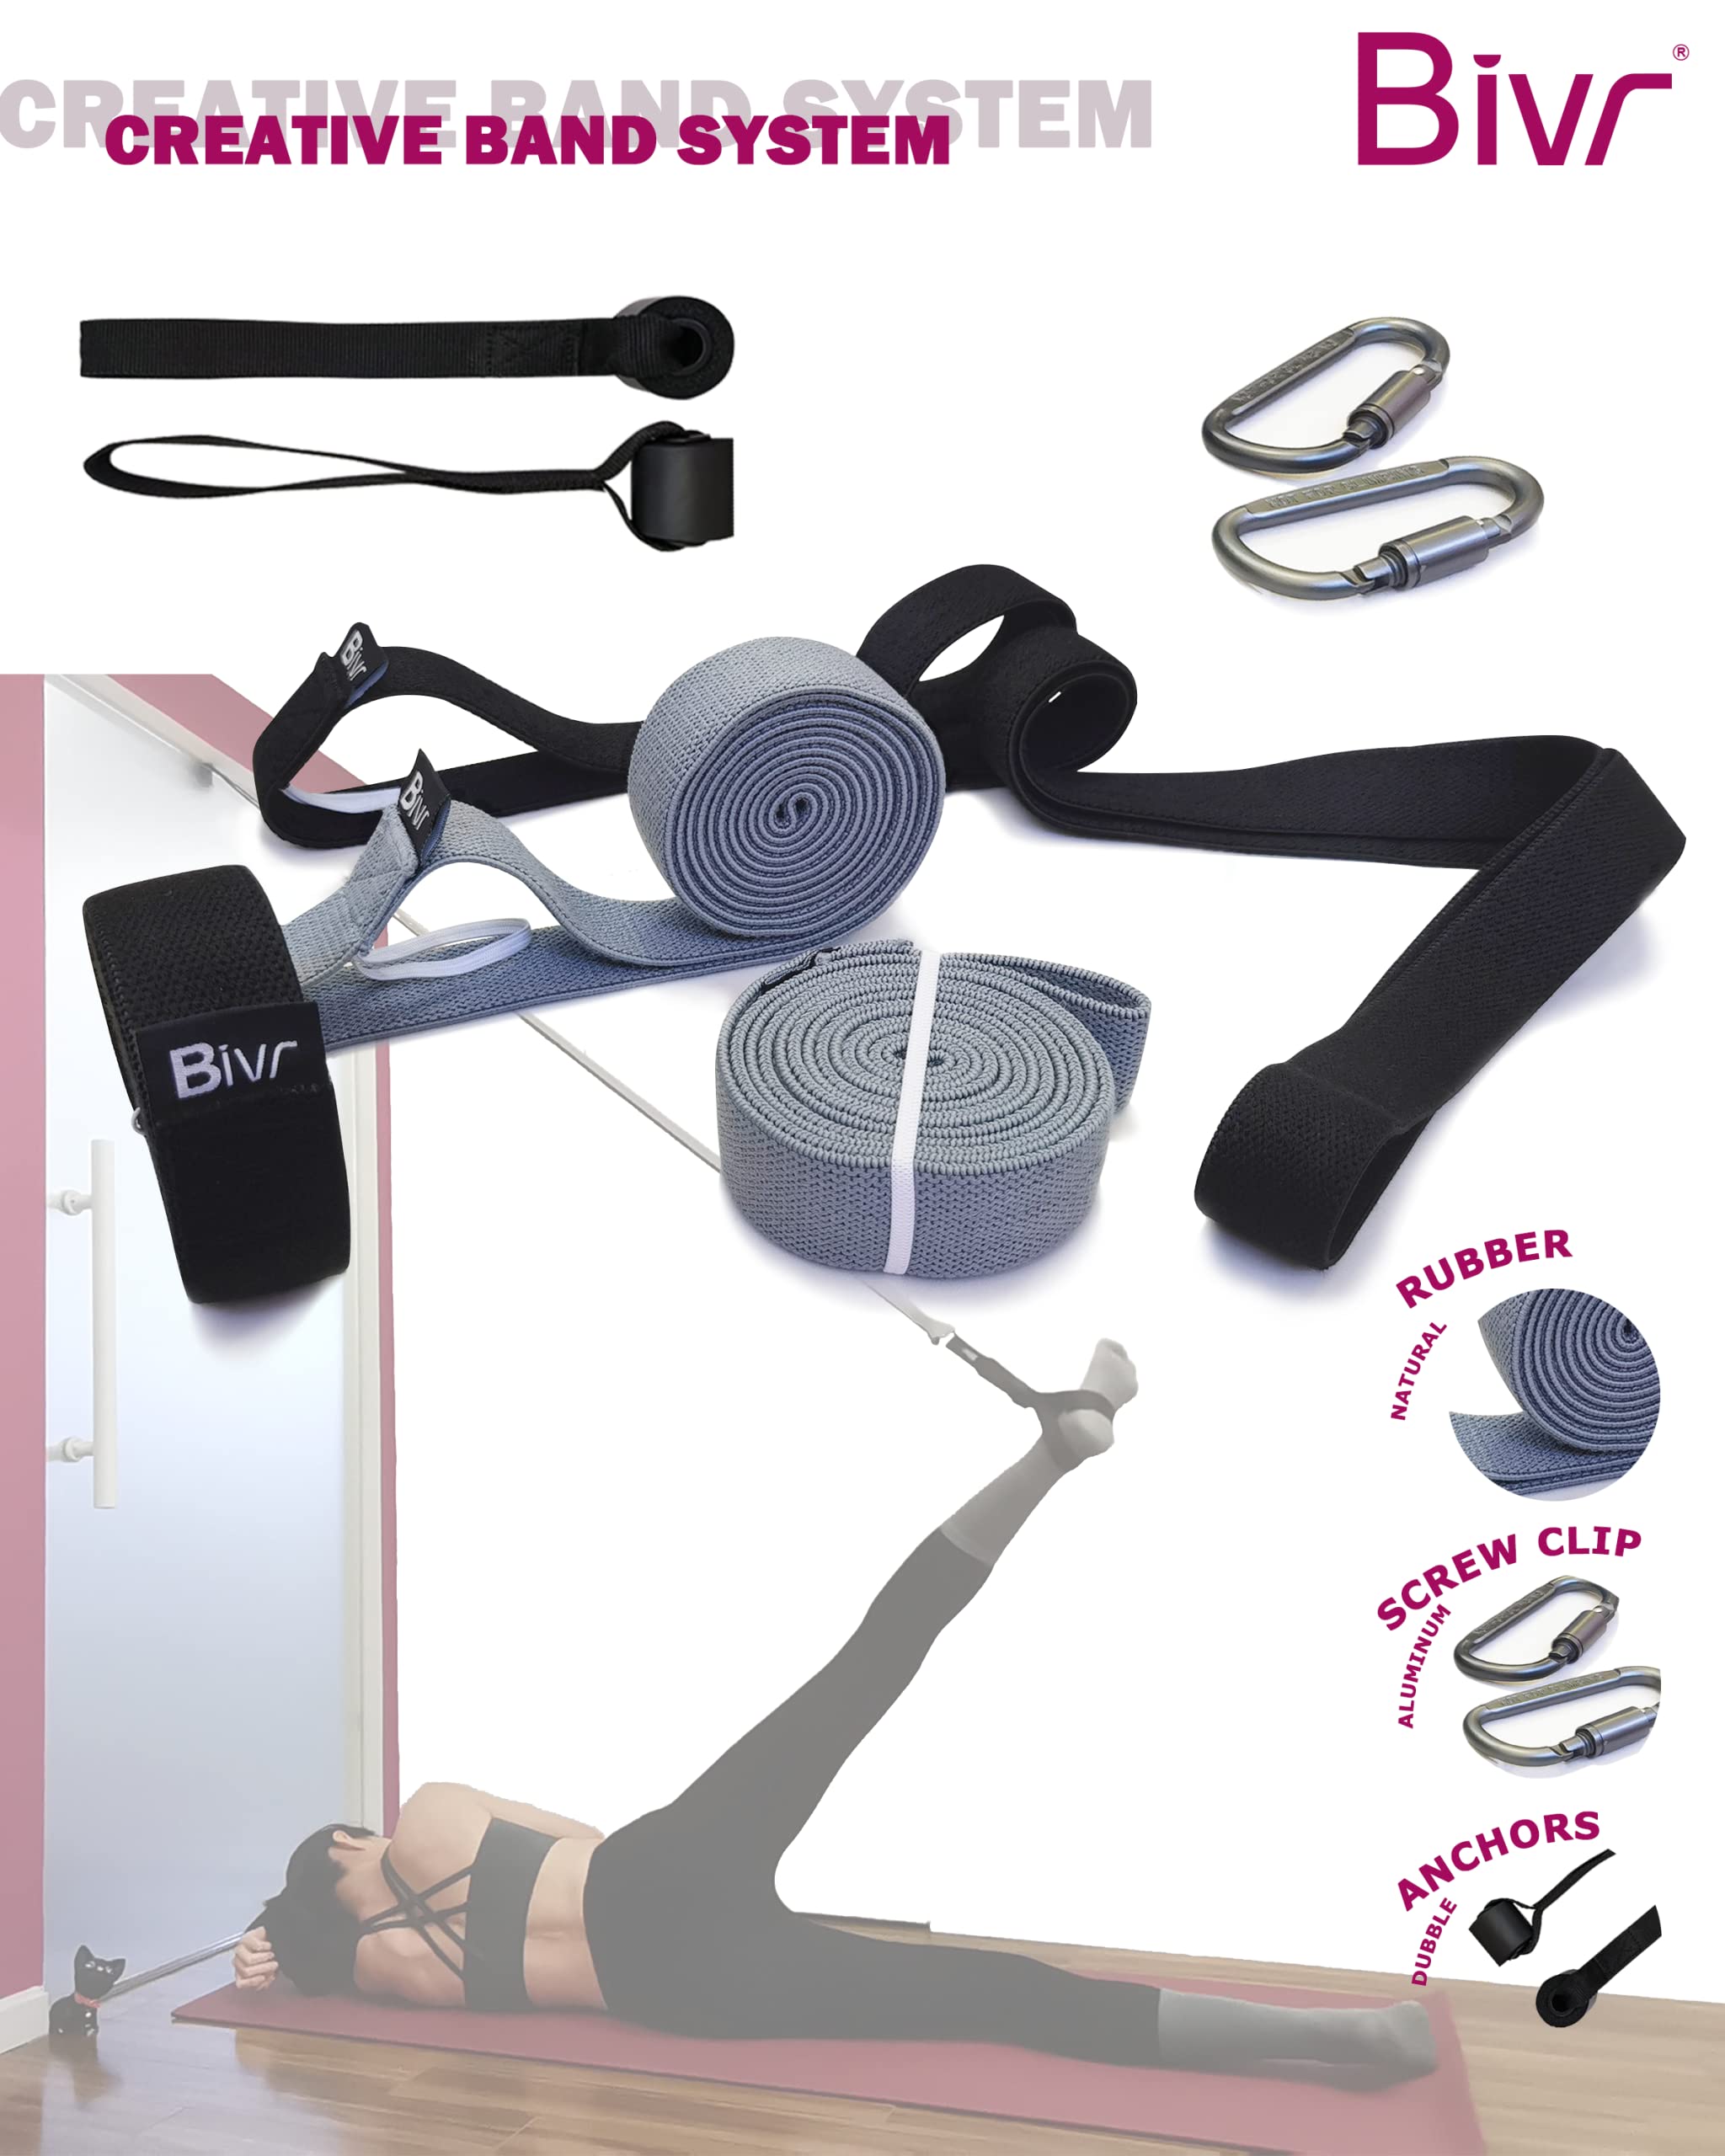 Bivr Pilates Equipment Pilates Home Kit with Knee Pad